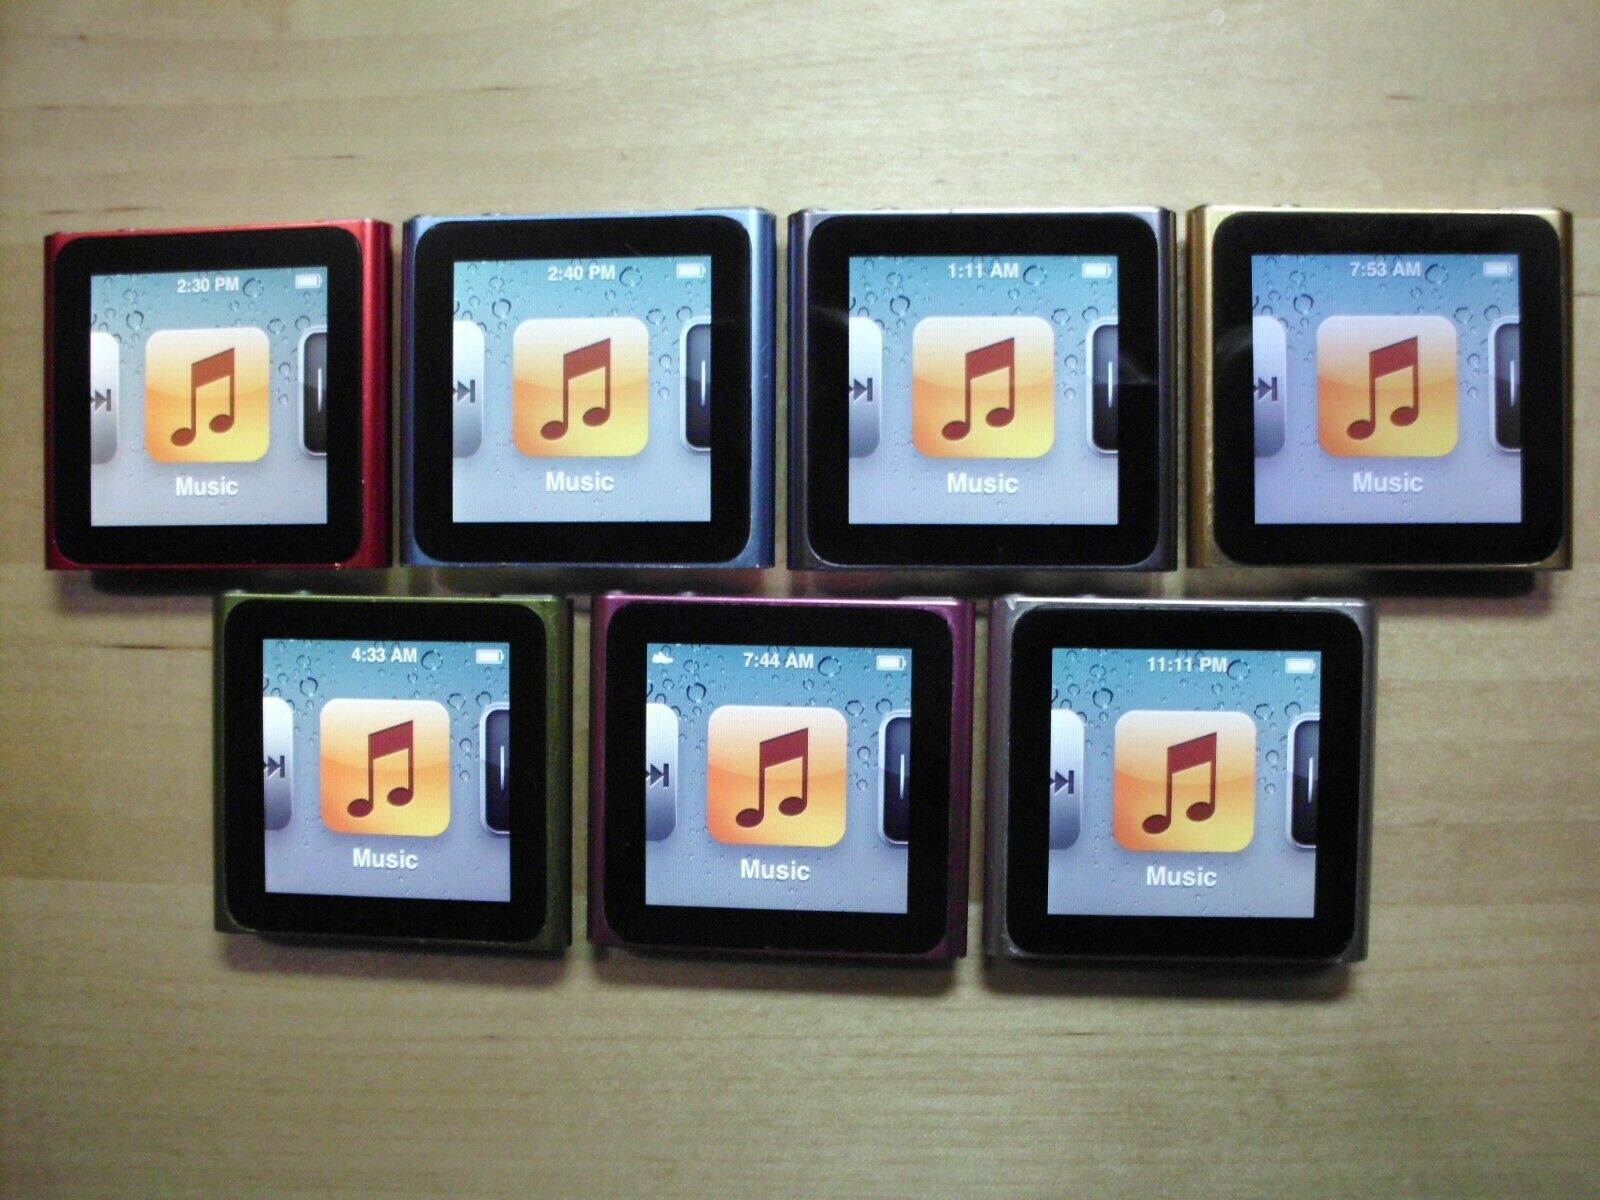 Apple iPod Nano 6th Generation 8, 16 GB - Refurbished, all colors,  guaranteed!